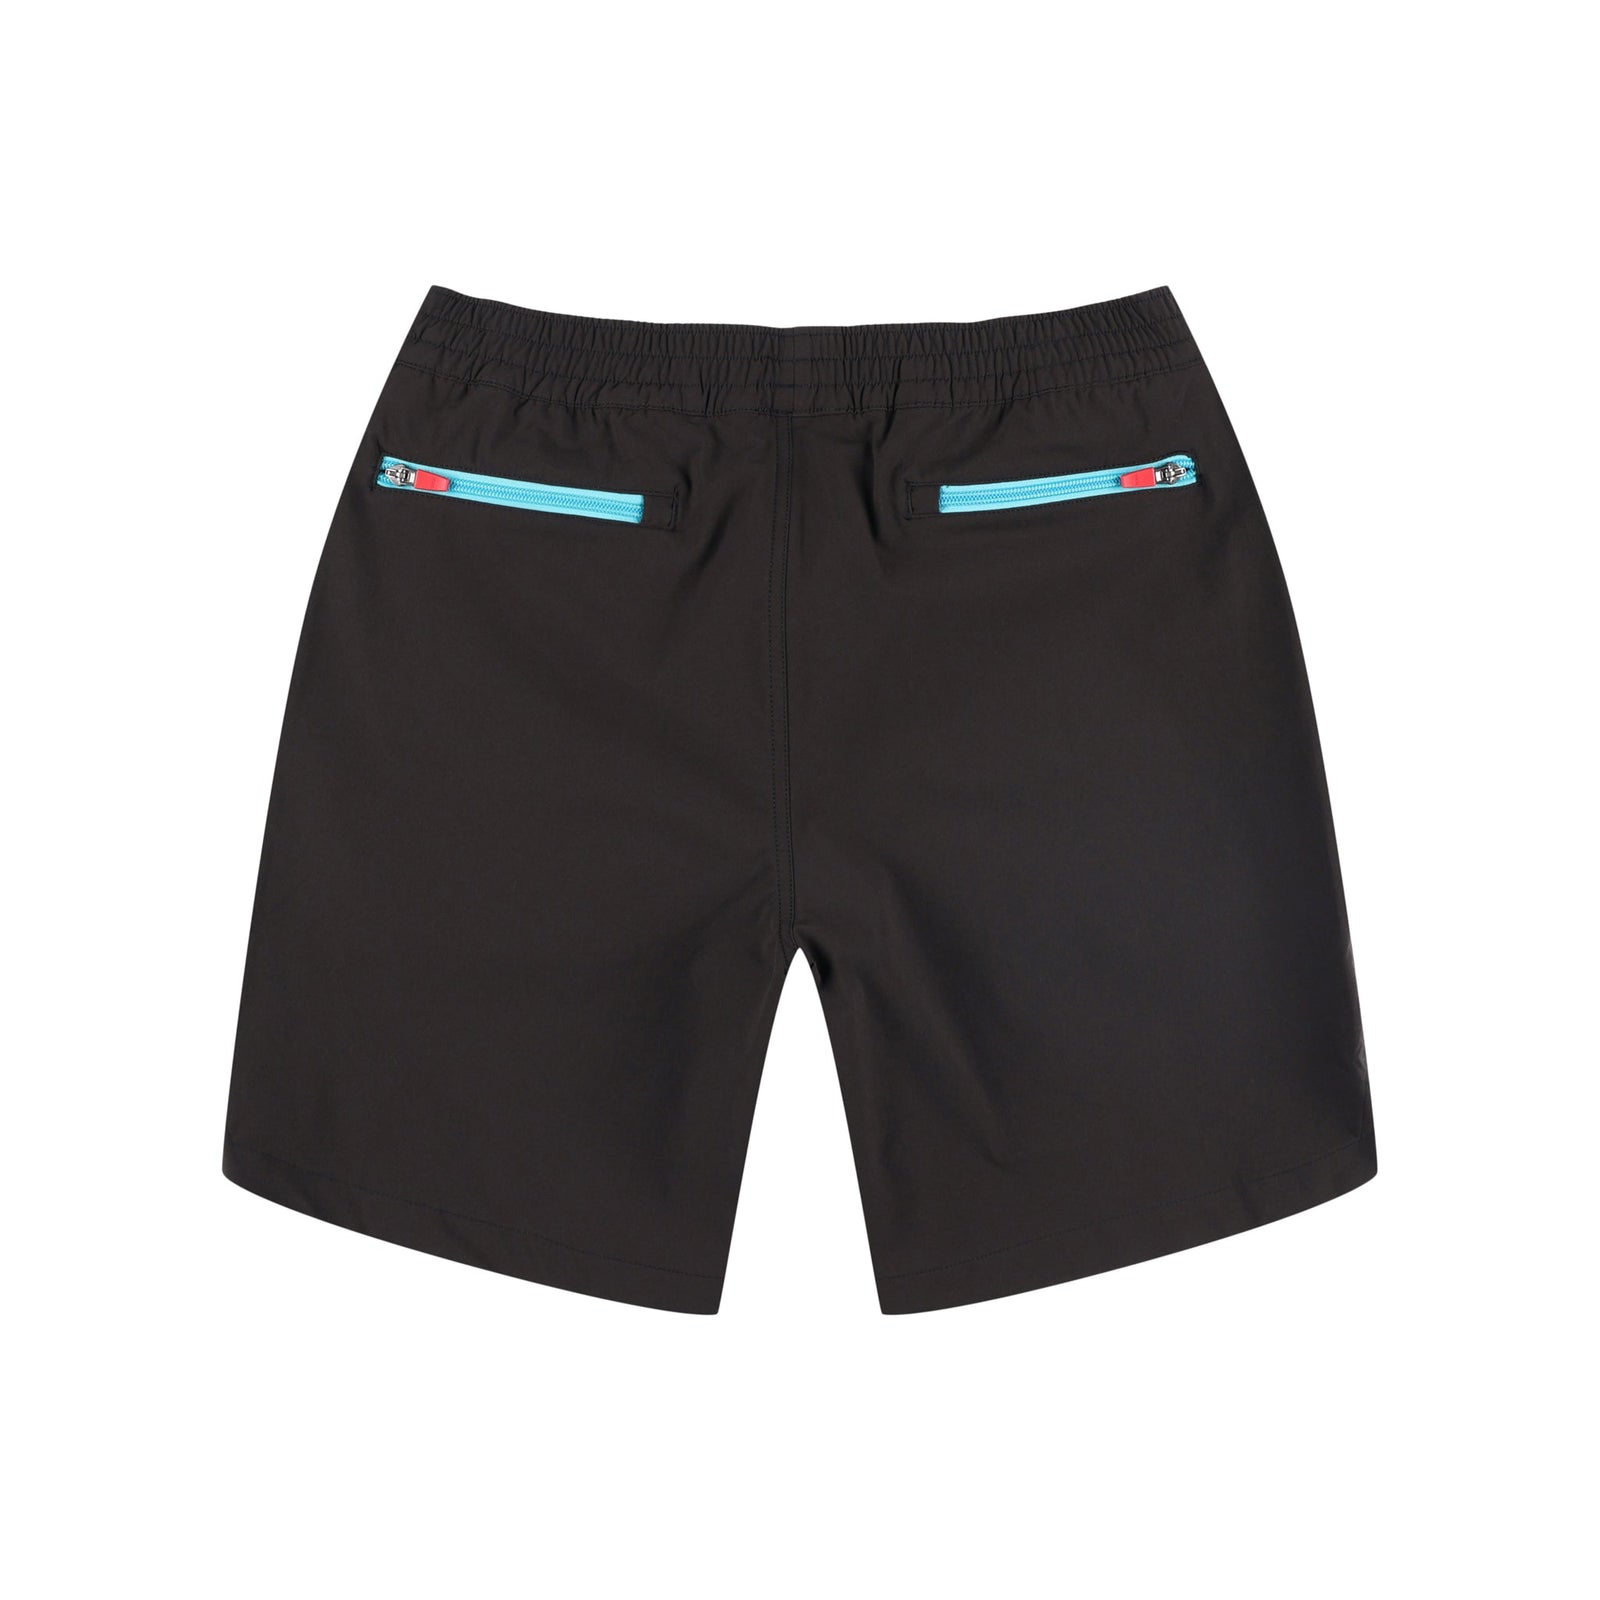 Back zipper pockets on Topo Designs Men's Global lightweight quick dry travel Shorts in "Black".